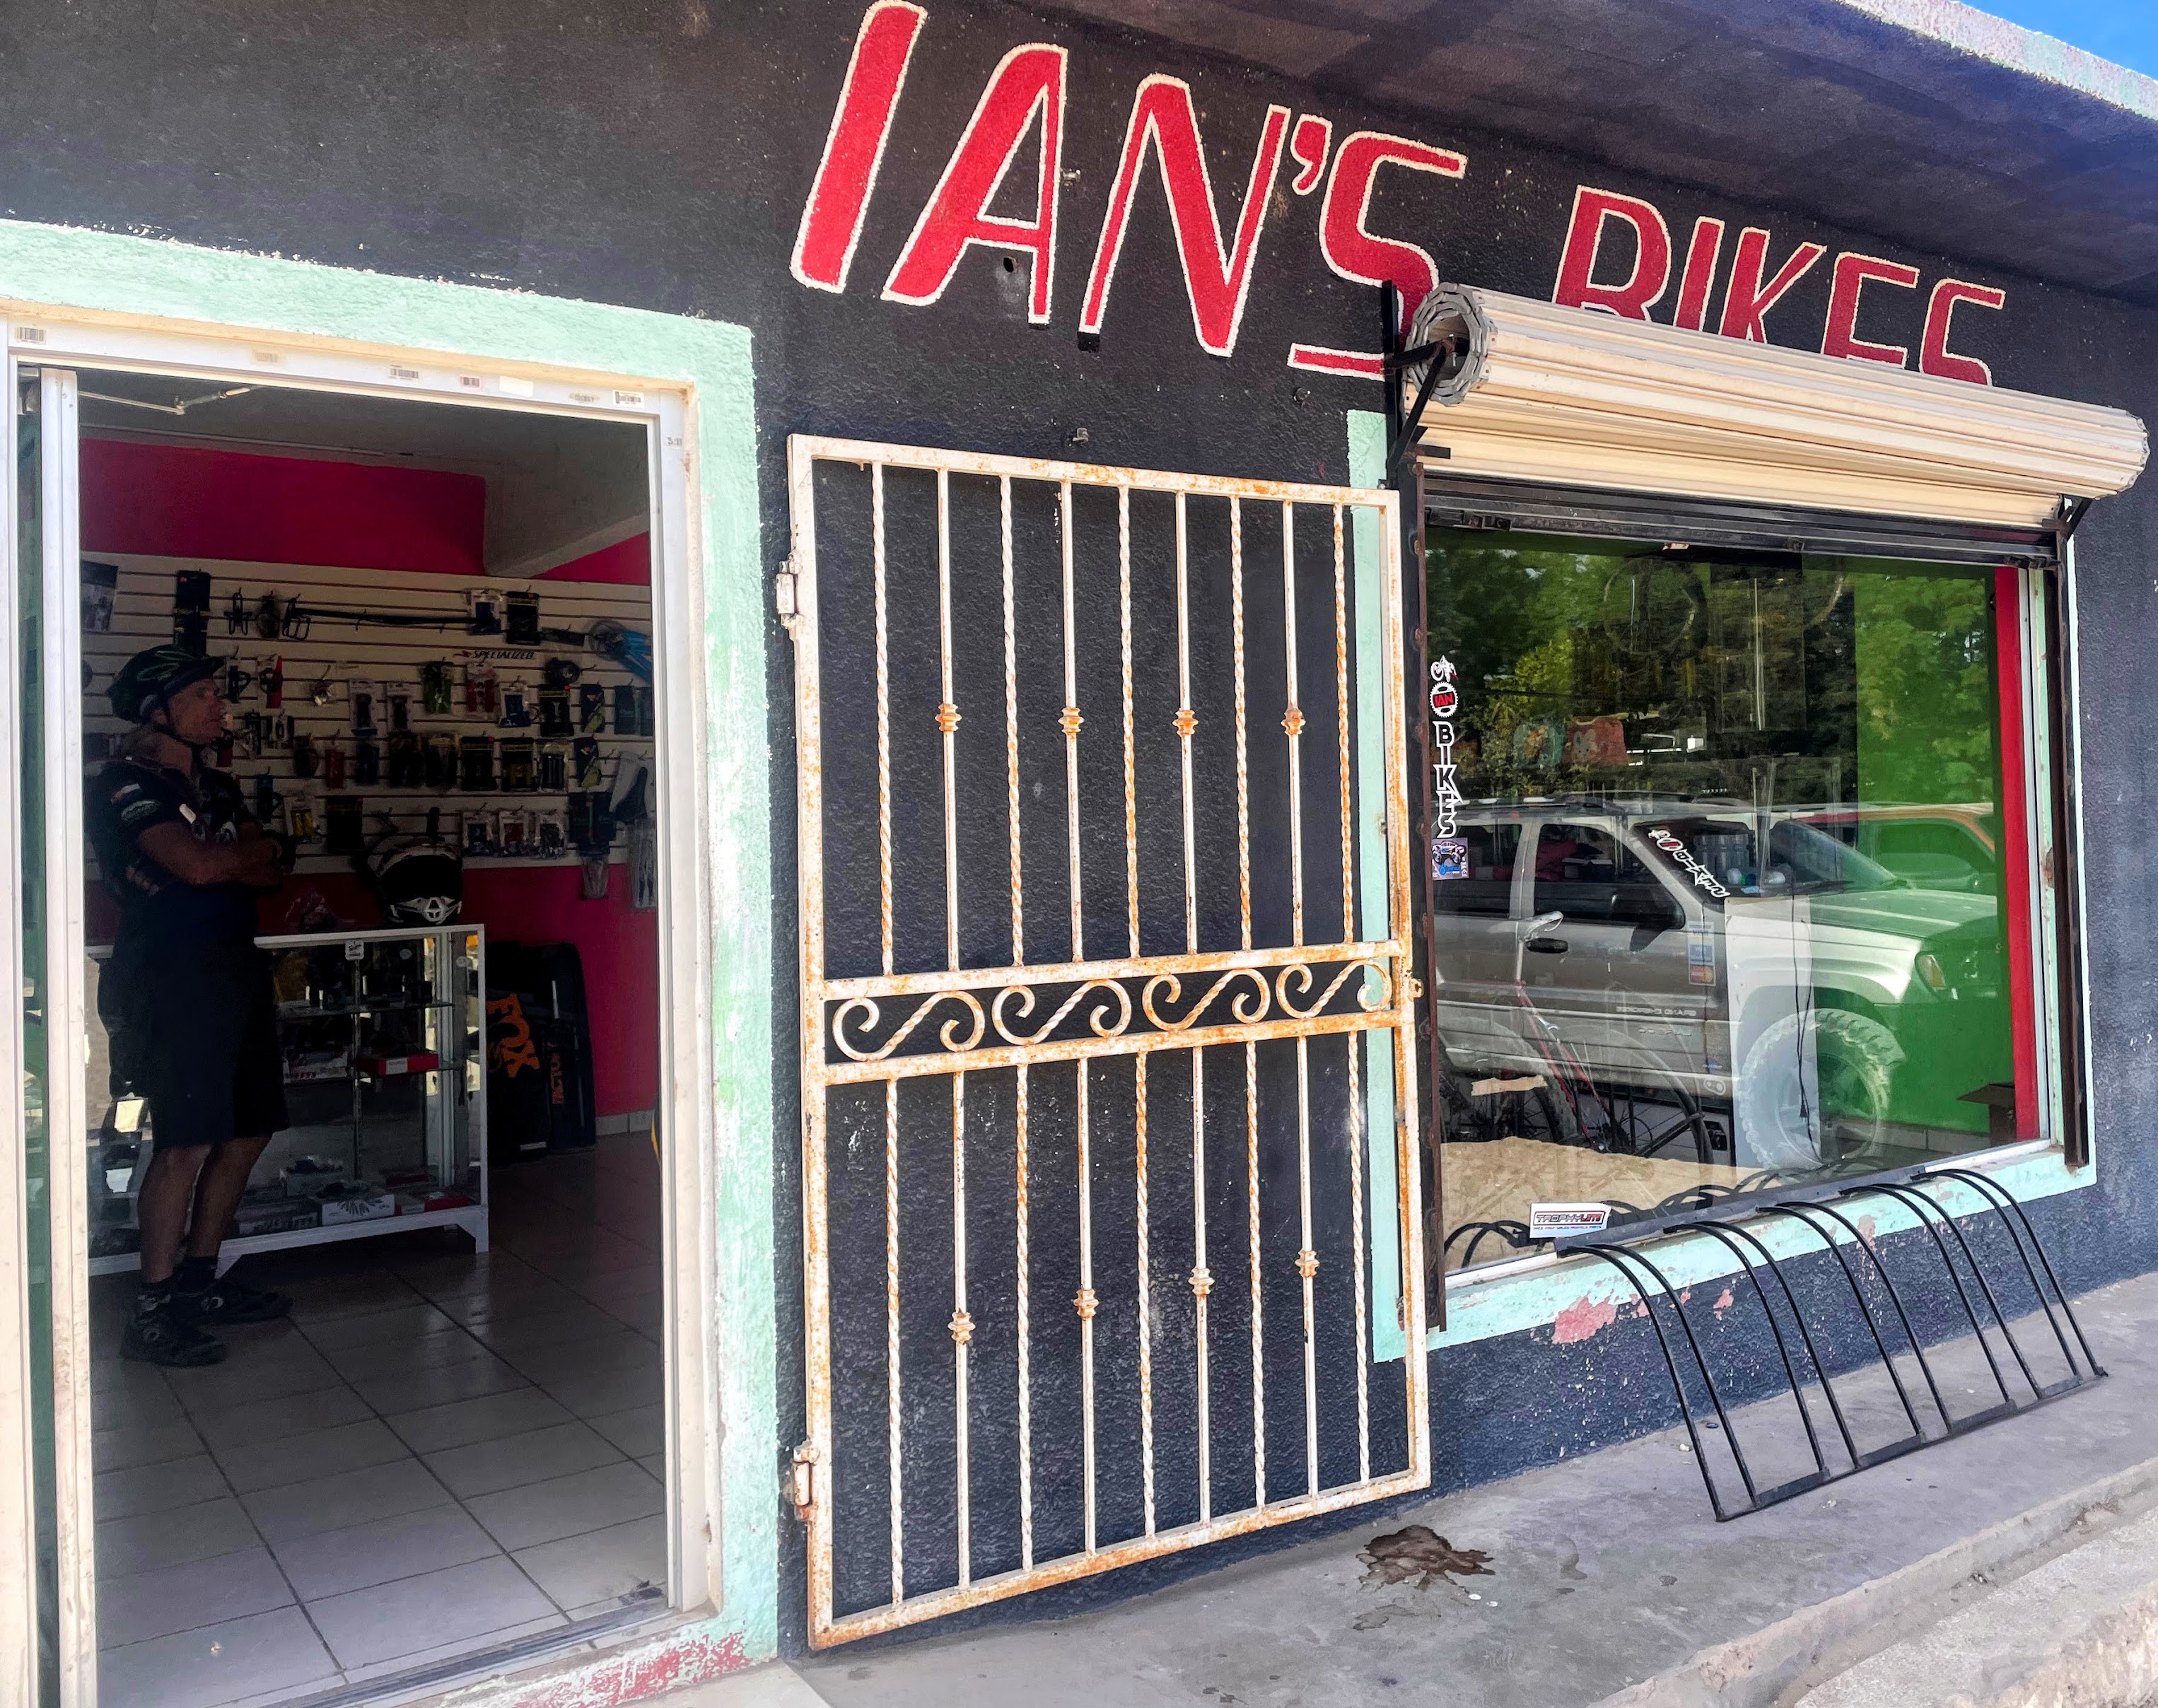 Ian's Bike Shop